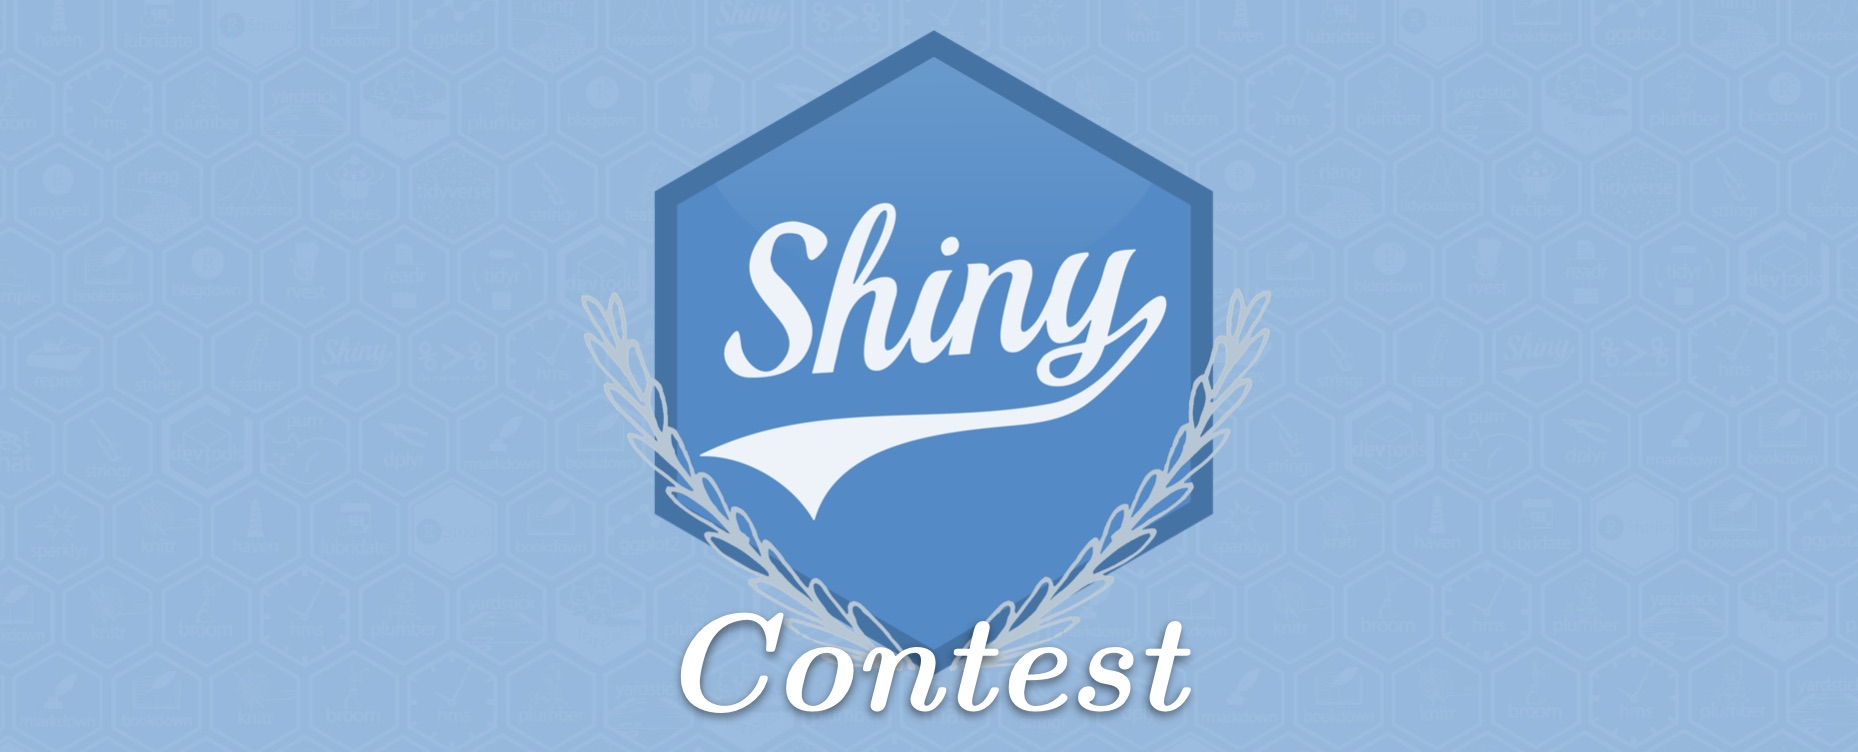 Shiny contest hexagon logo